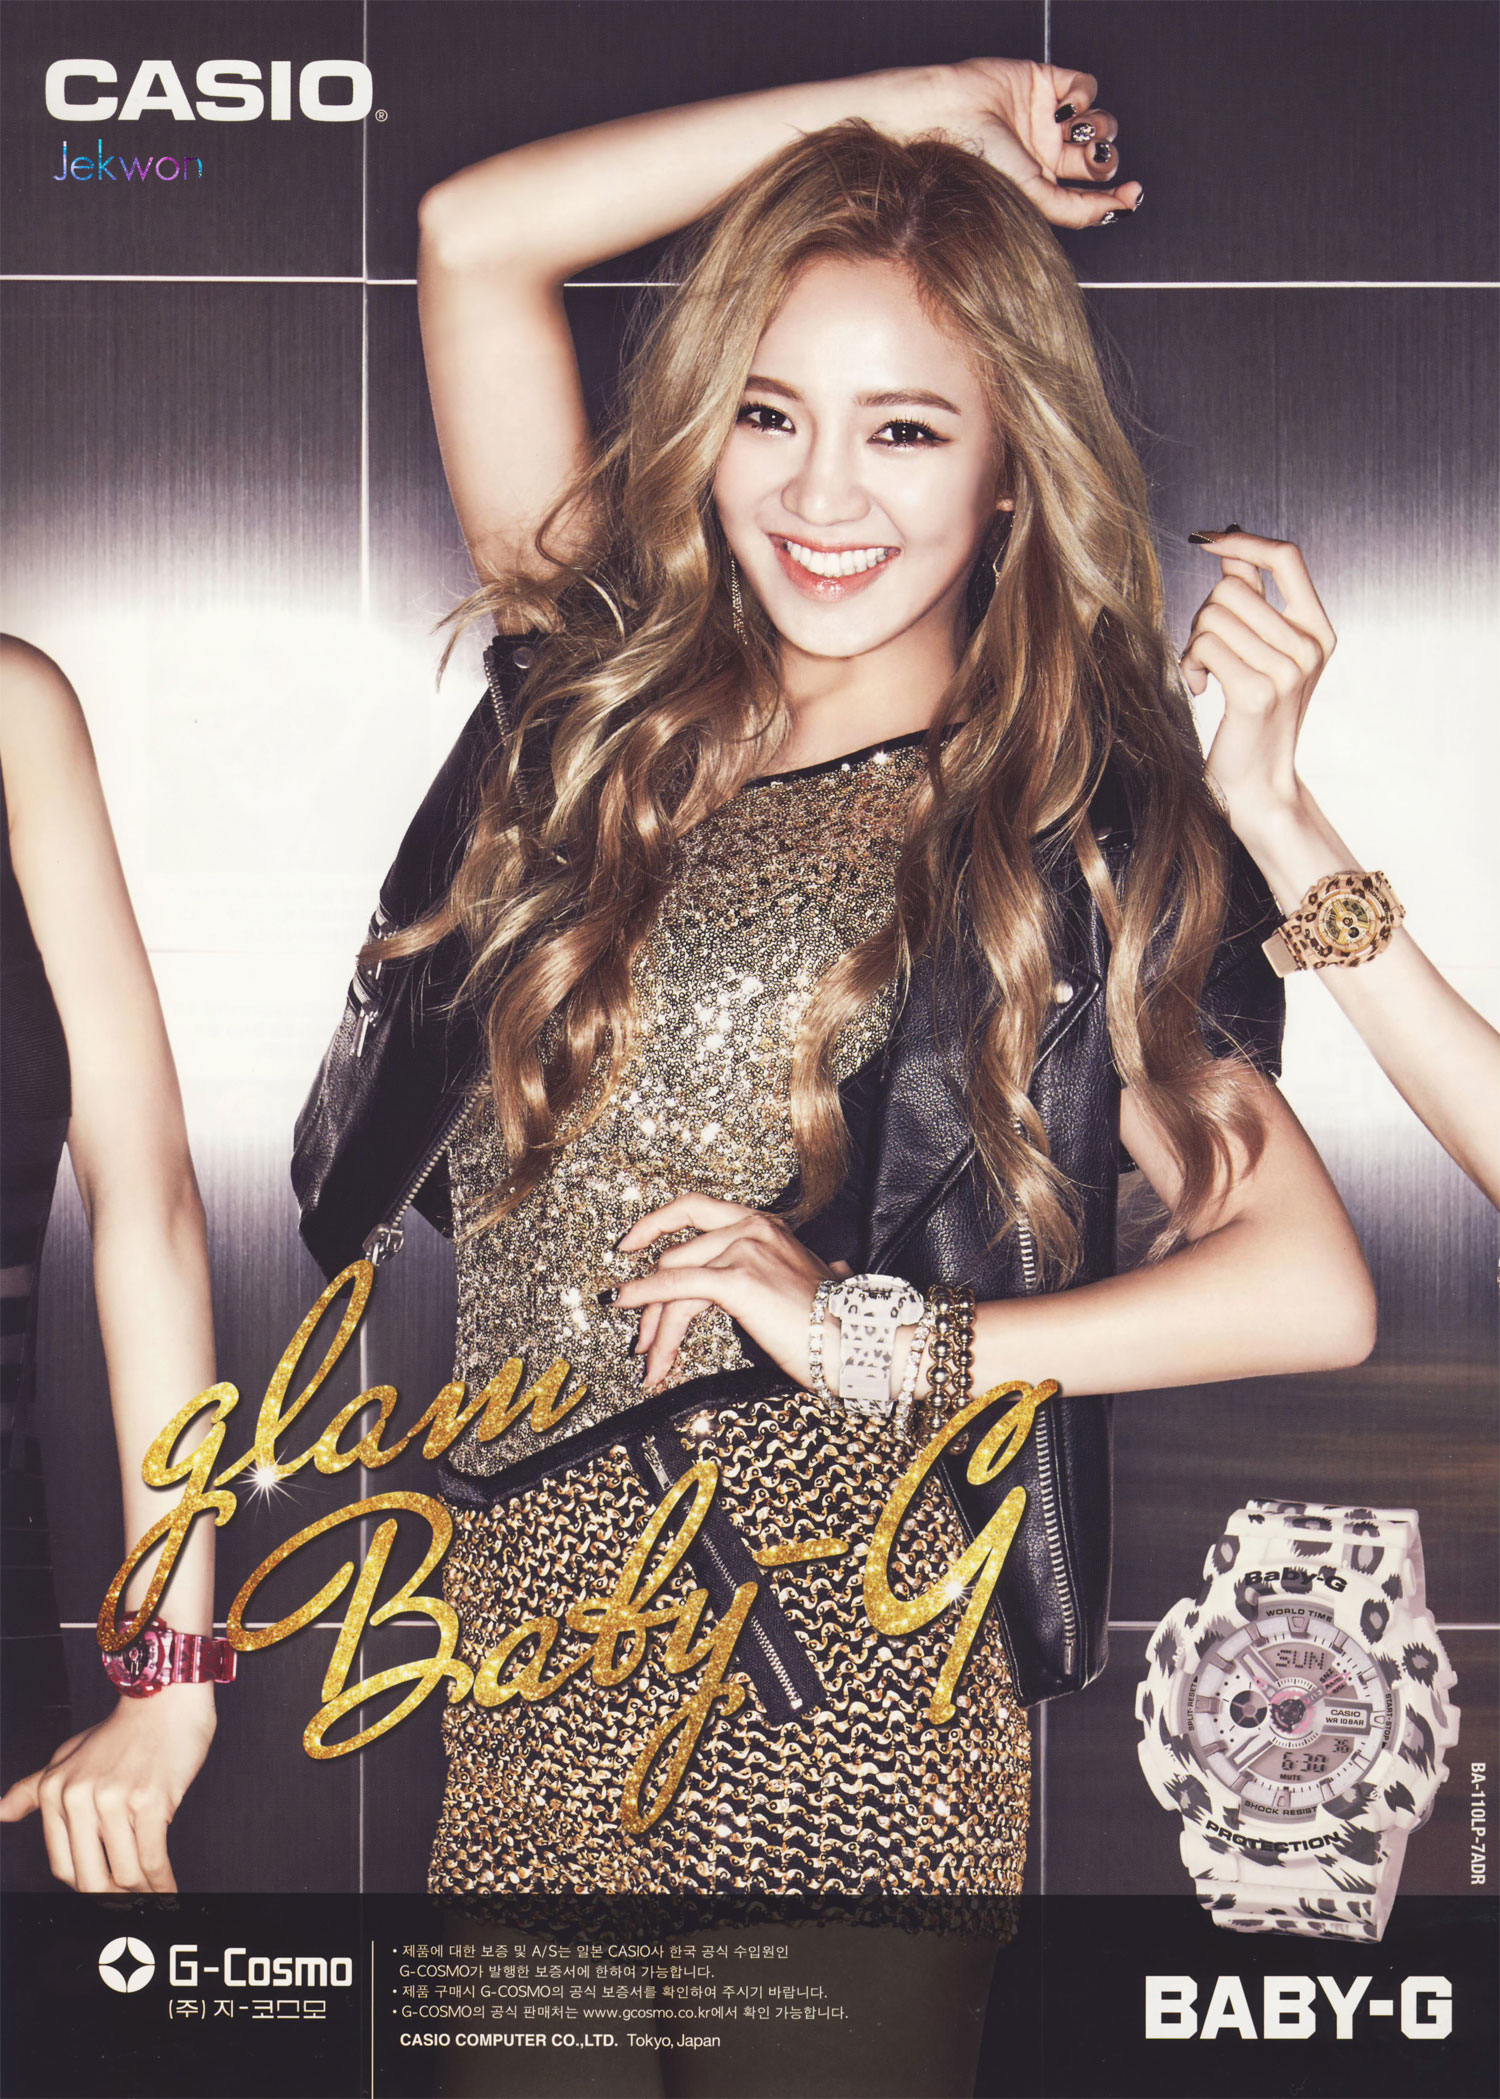 Girls Generation Hyoyeon Casio BabyG Glam